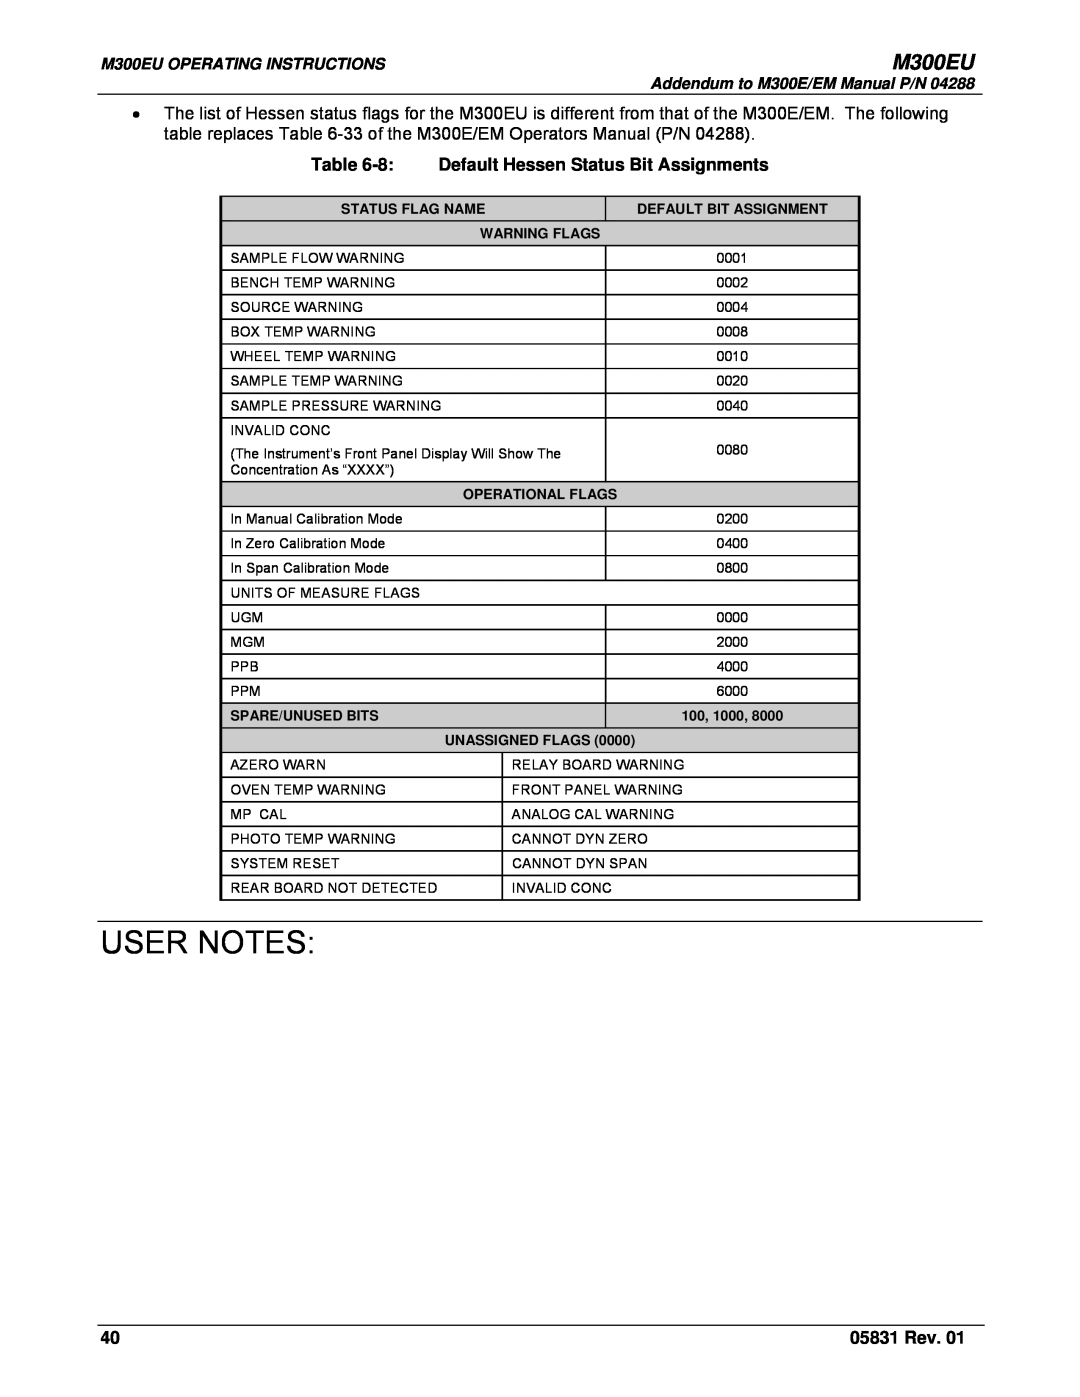 Teledyne Model 300EU User Notes, M300EU, Default Hessen Status Bit Assignments, 05831 Rev, Addendum to M300E/EM Manual P/N 